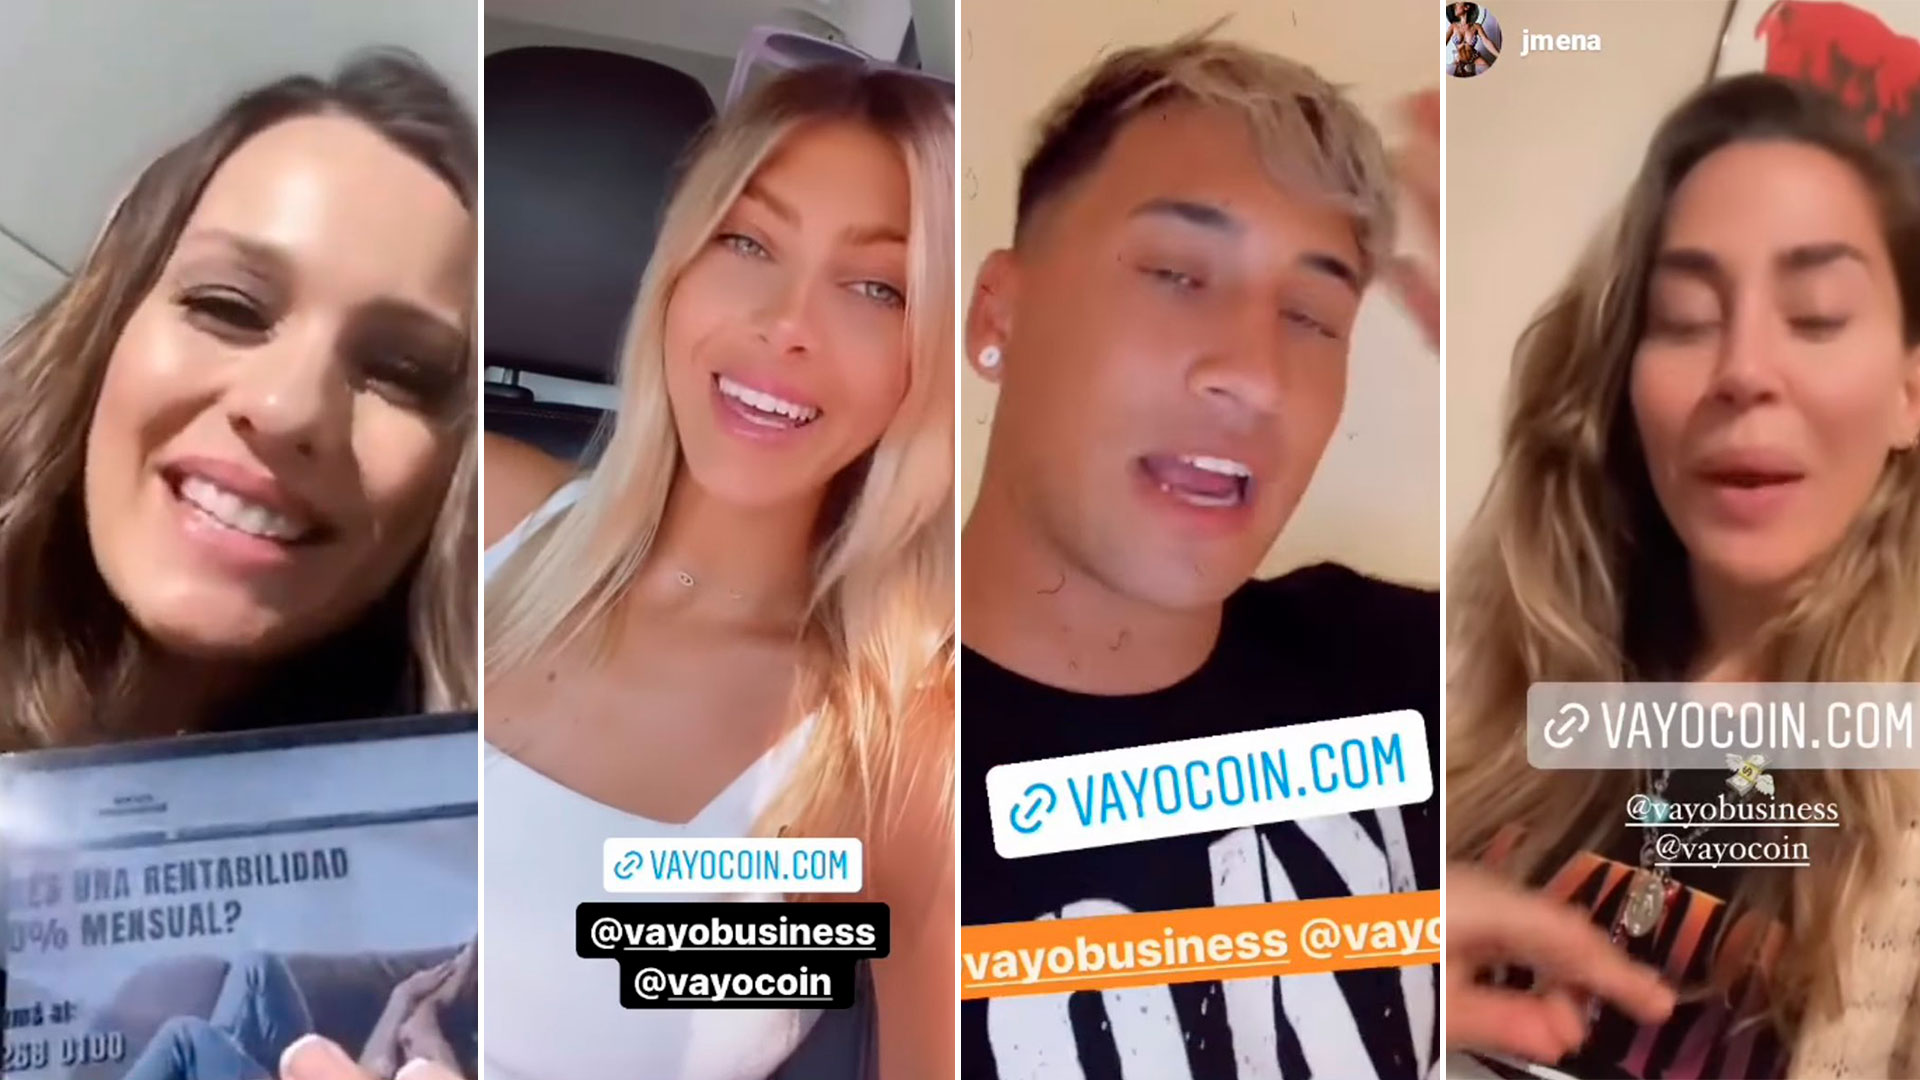 Pampita, Cande Ruggeri, Yao Cabrera and Jimena Barón, among the celebrities who announced Vayo.